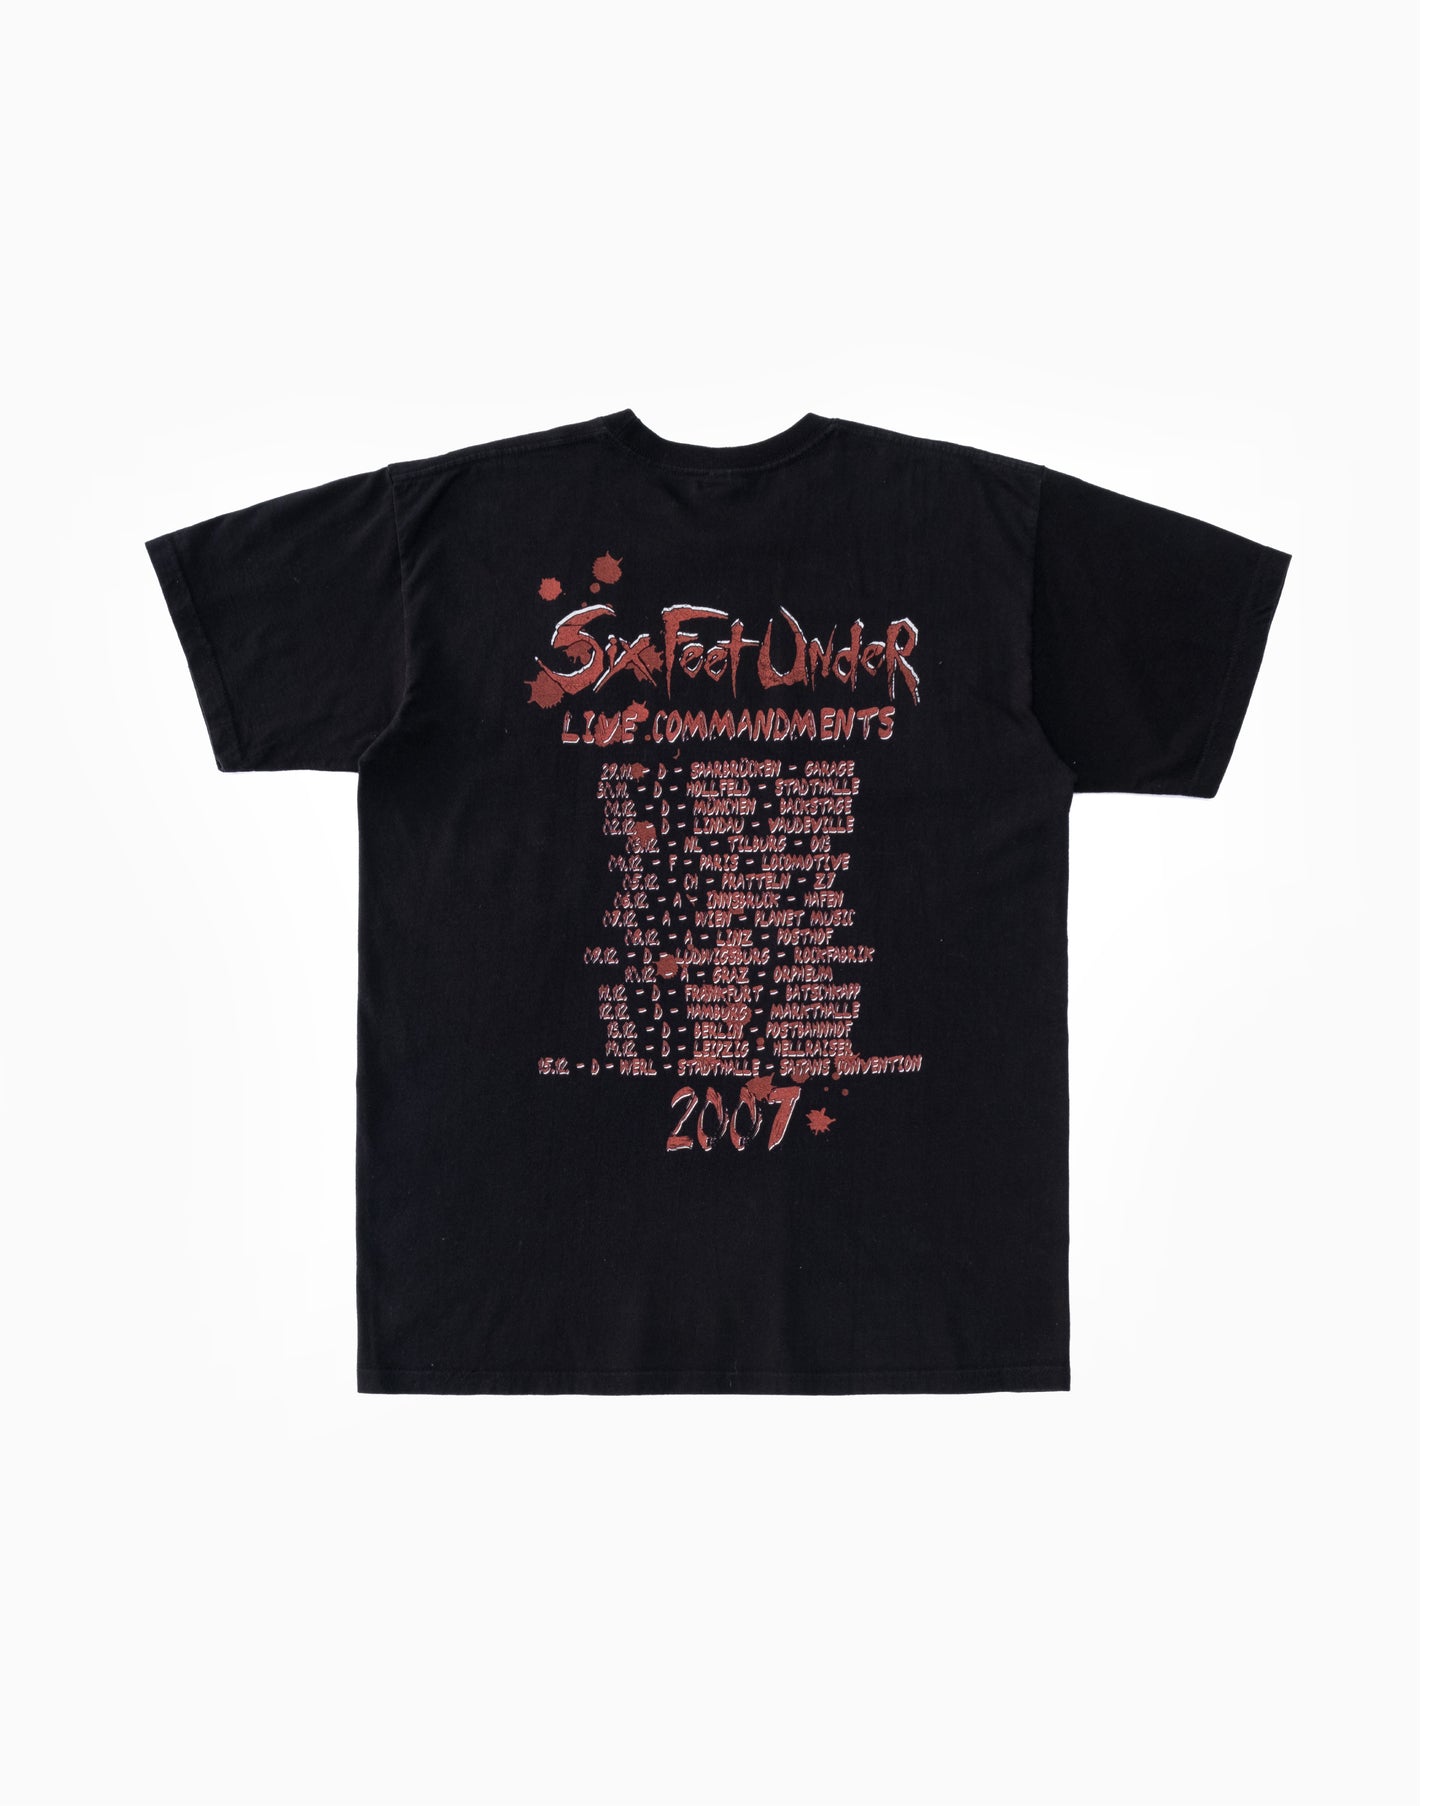 2007 Six Feet Under Live Commandments Tour T-Shirt